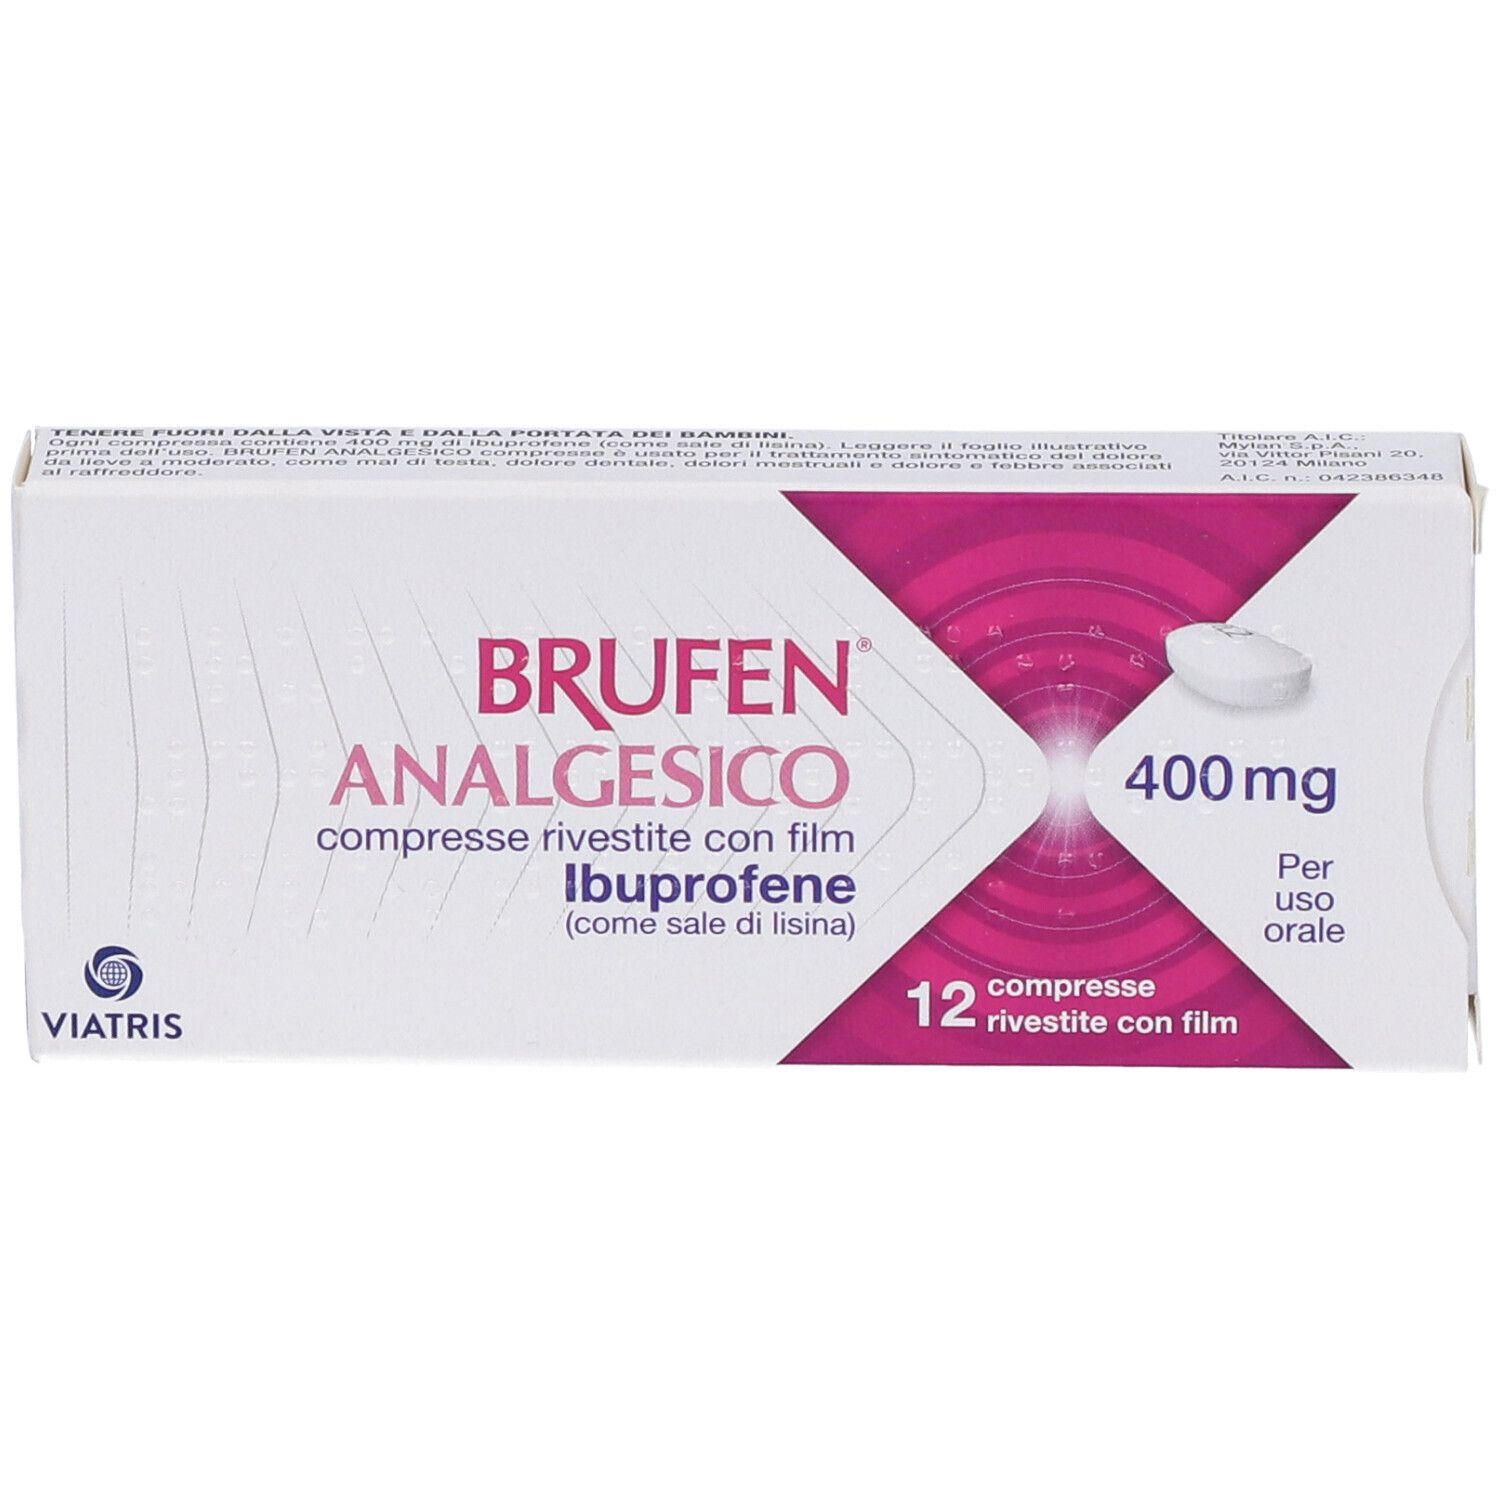 BRUFEN® Analgesico 400 mg